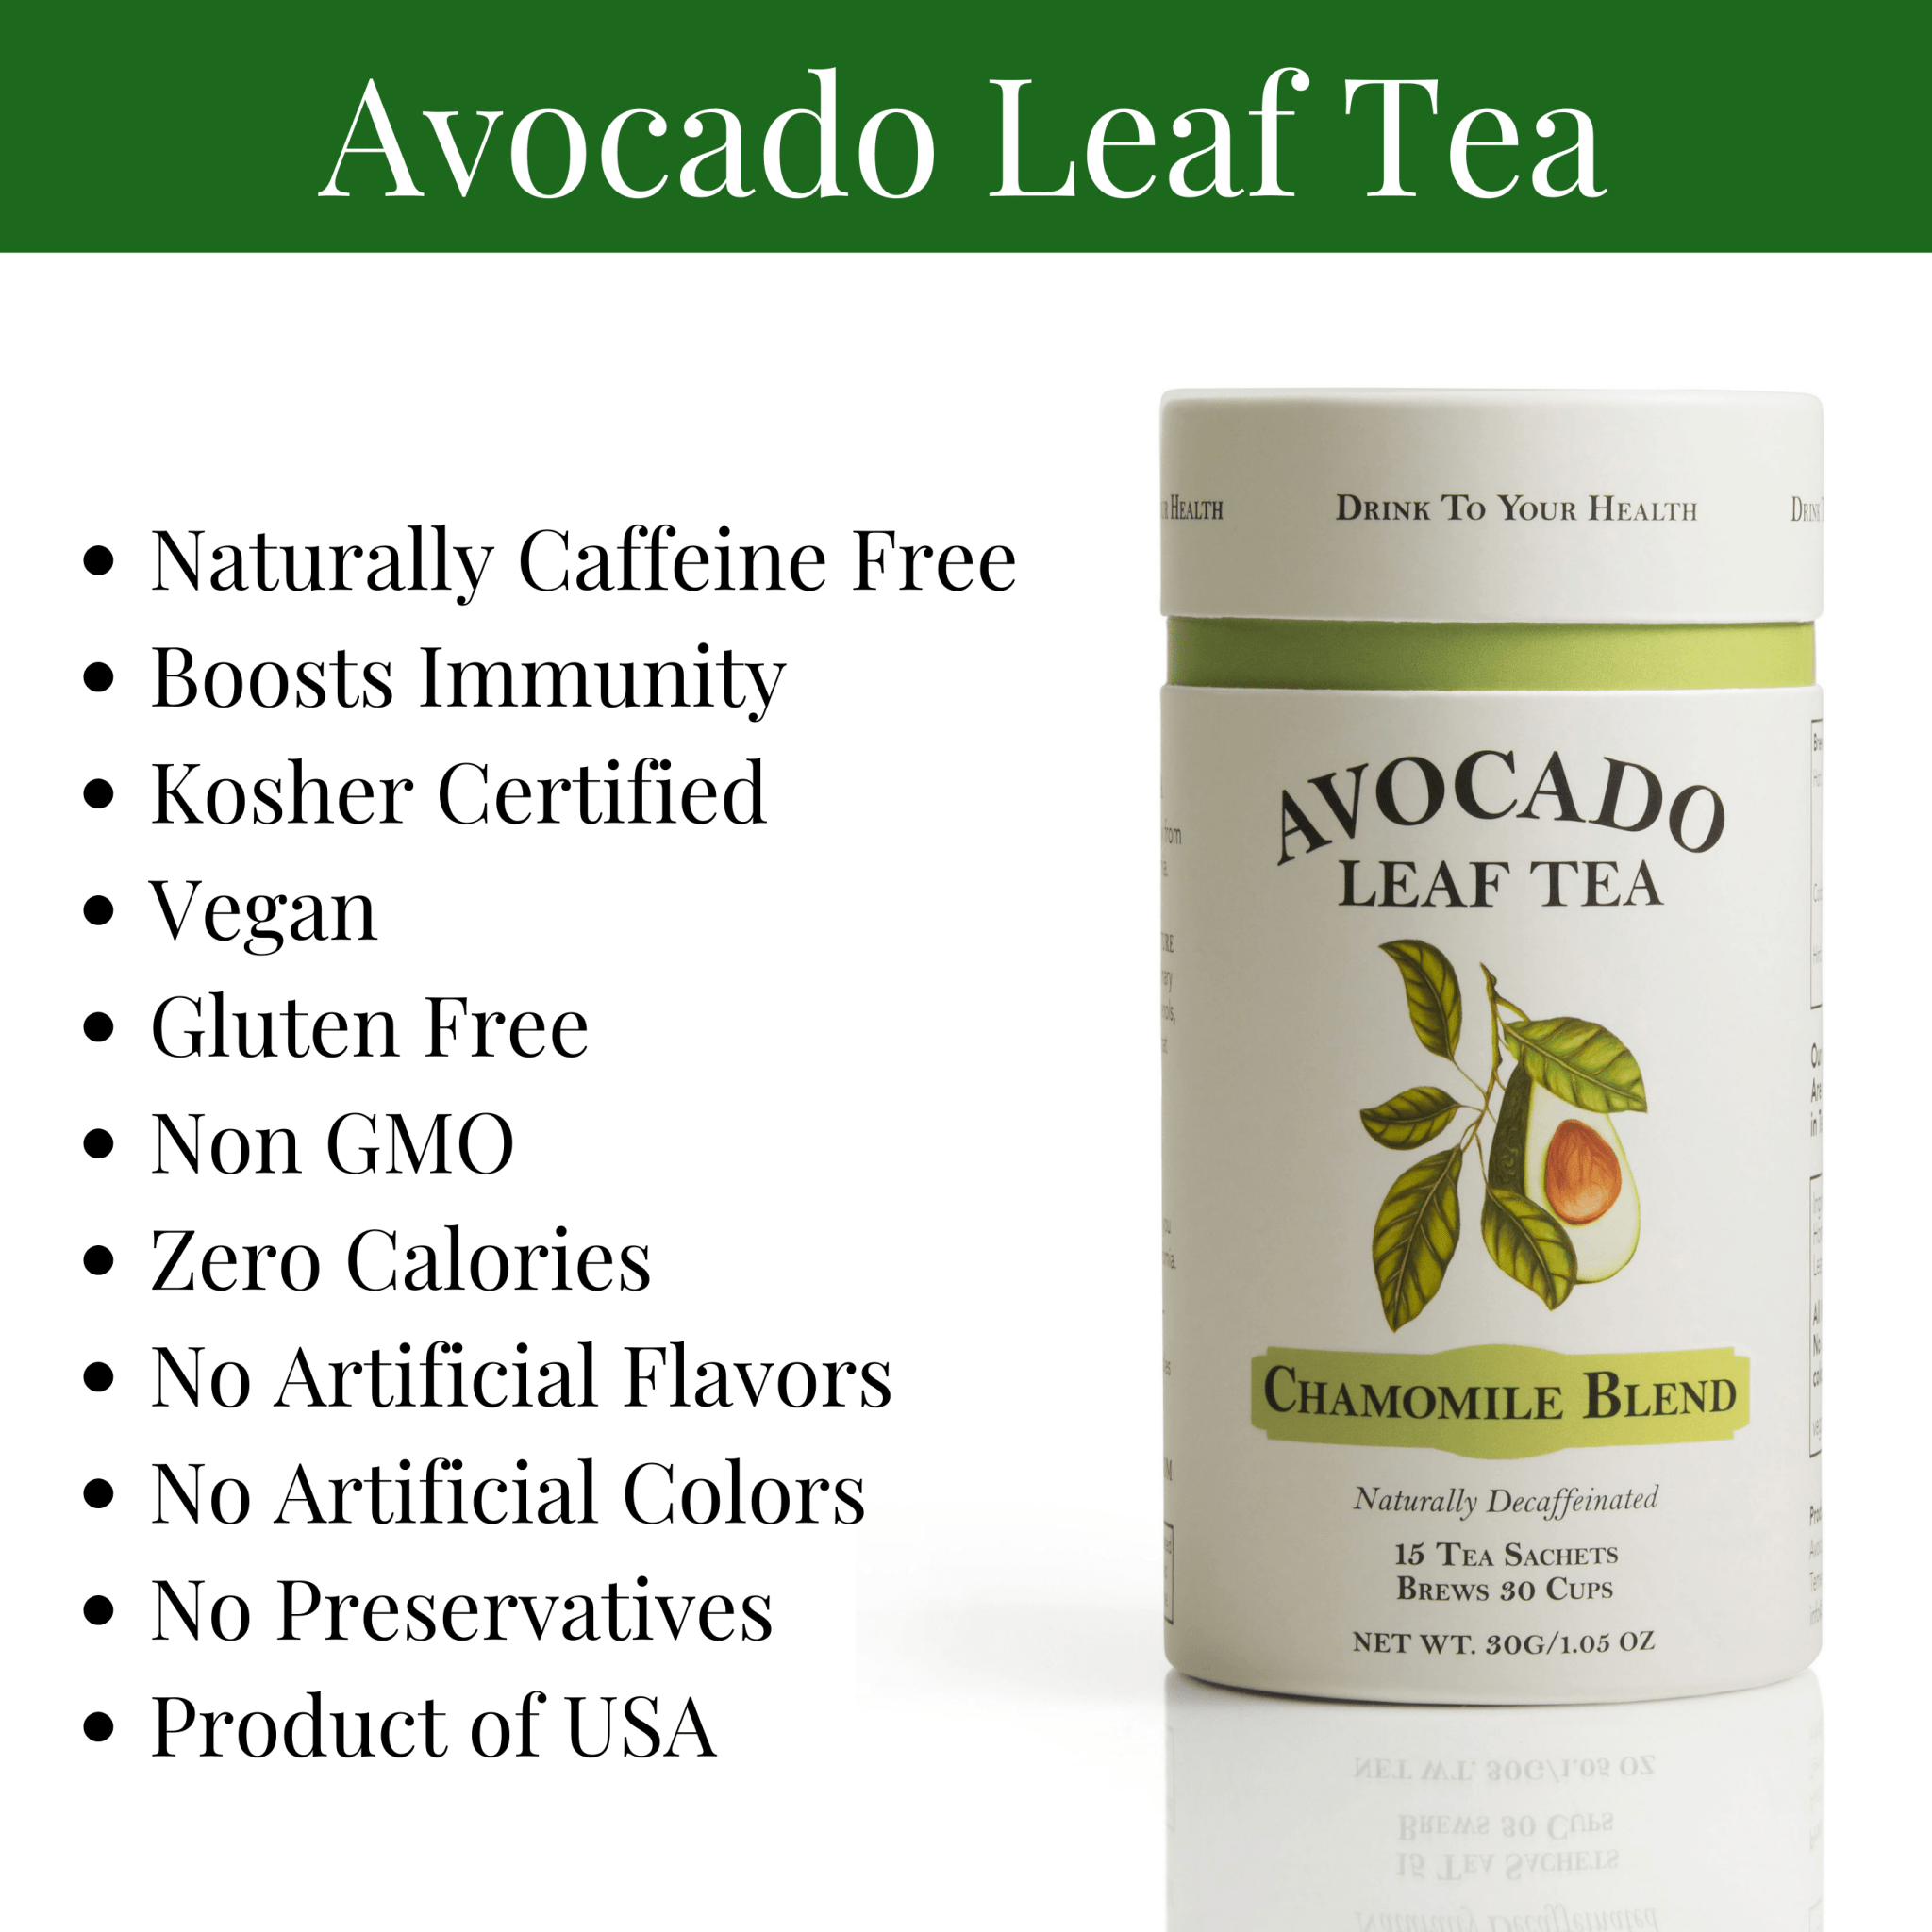 avocado leaf chammomile tea, aquacate te, health benefits, natural energy, antioxidant rich, wellness beverage, tea blend